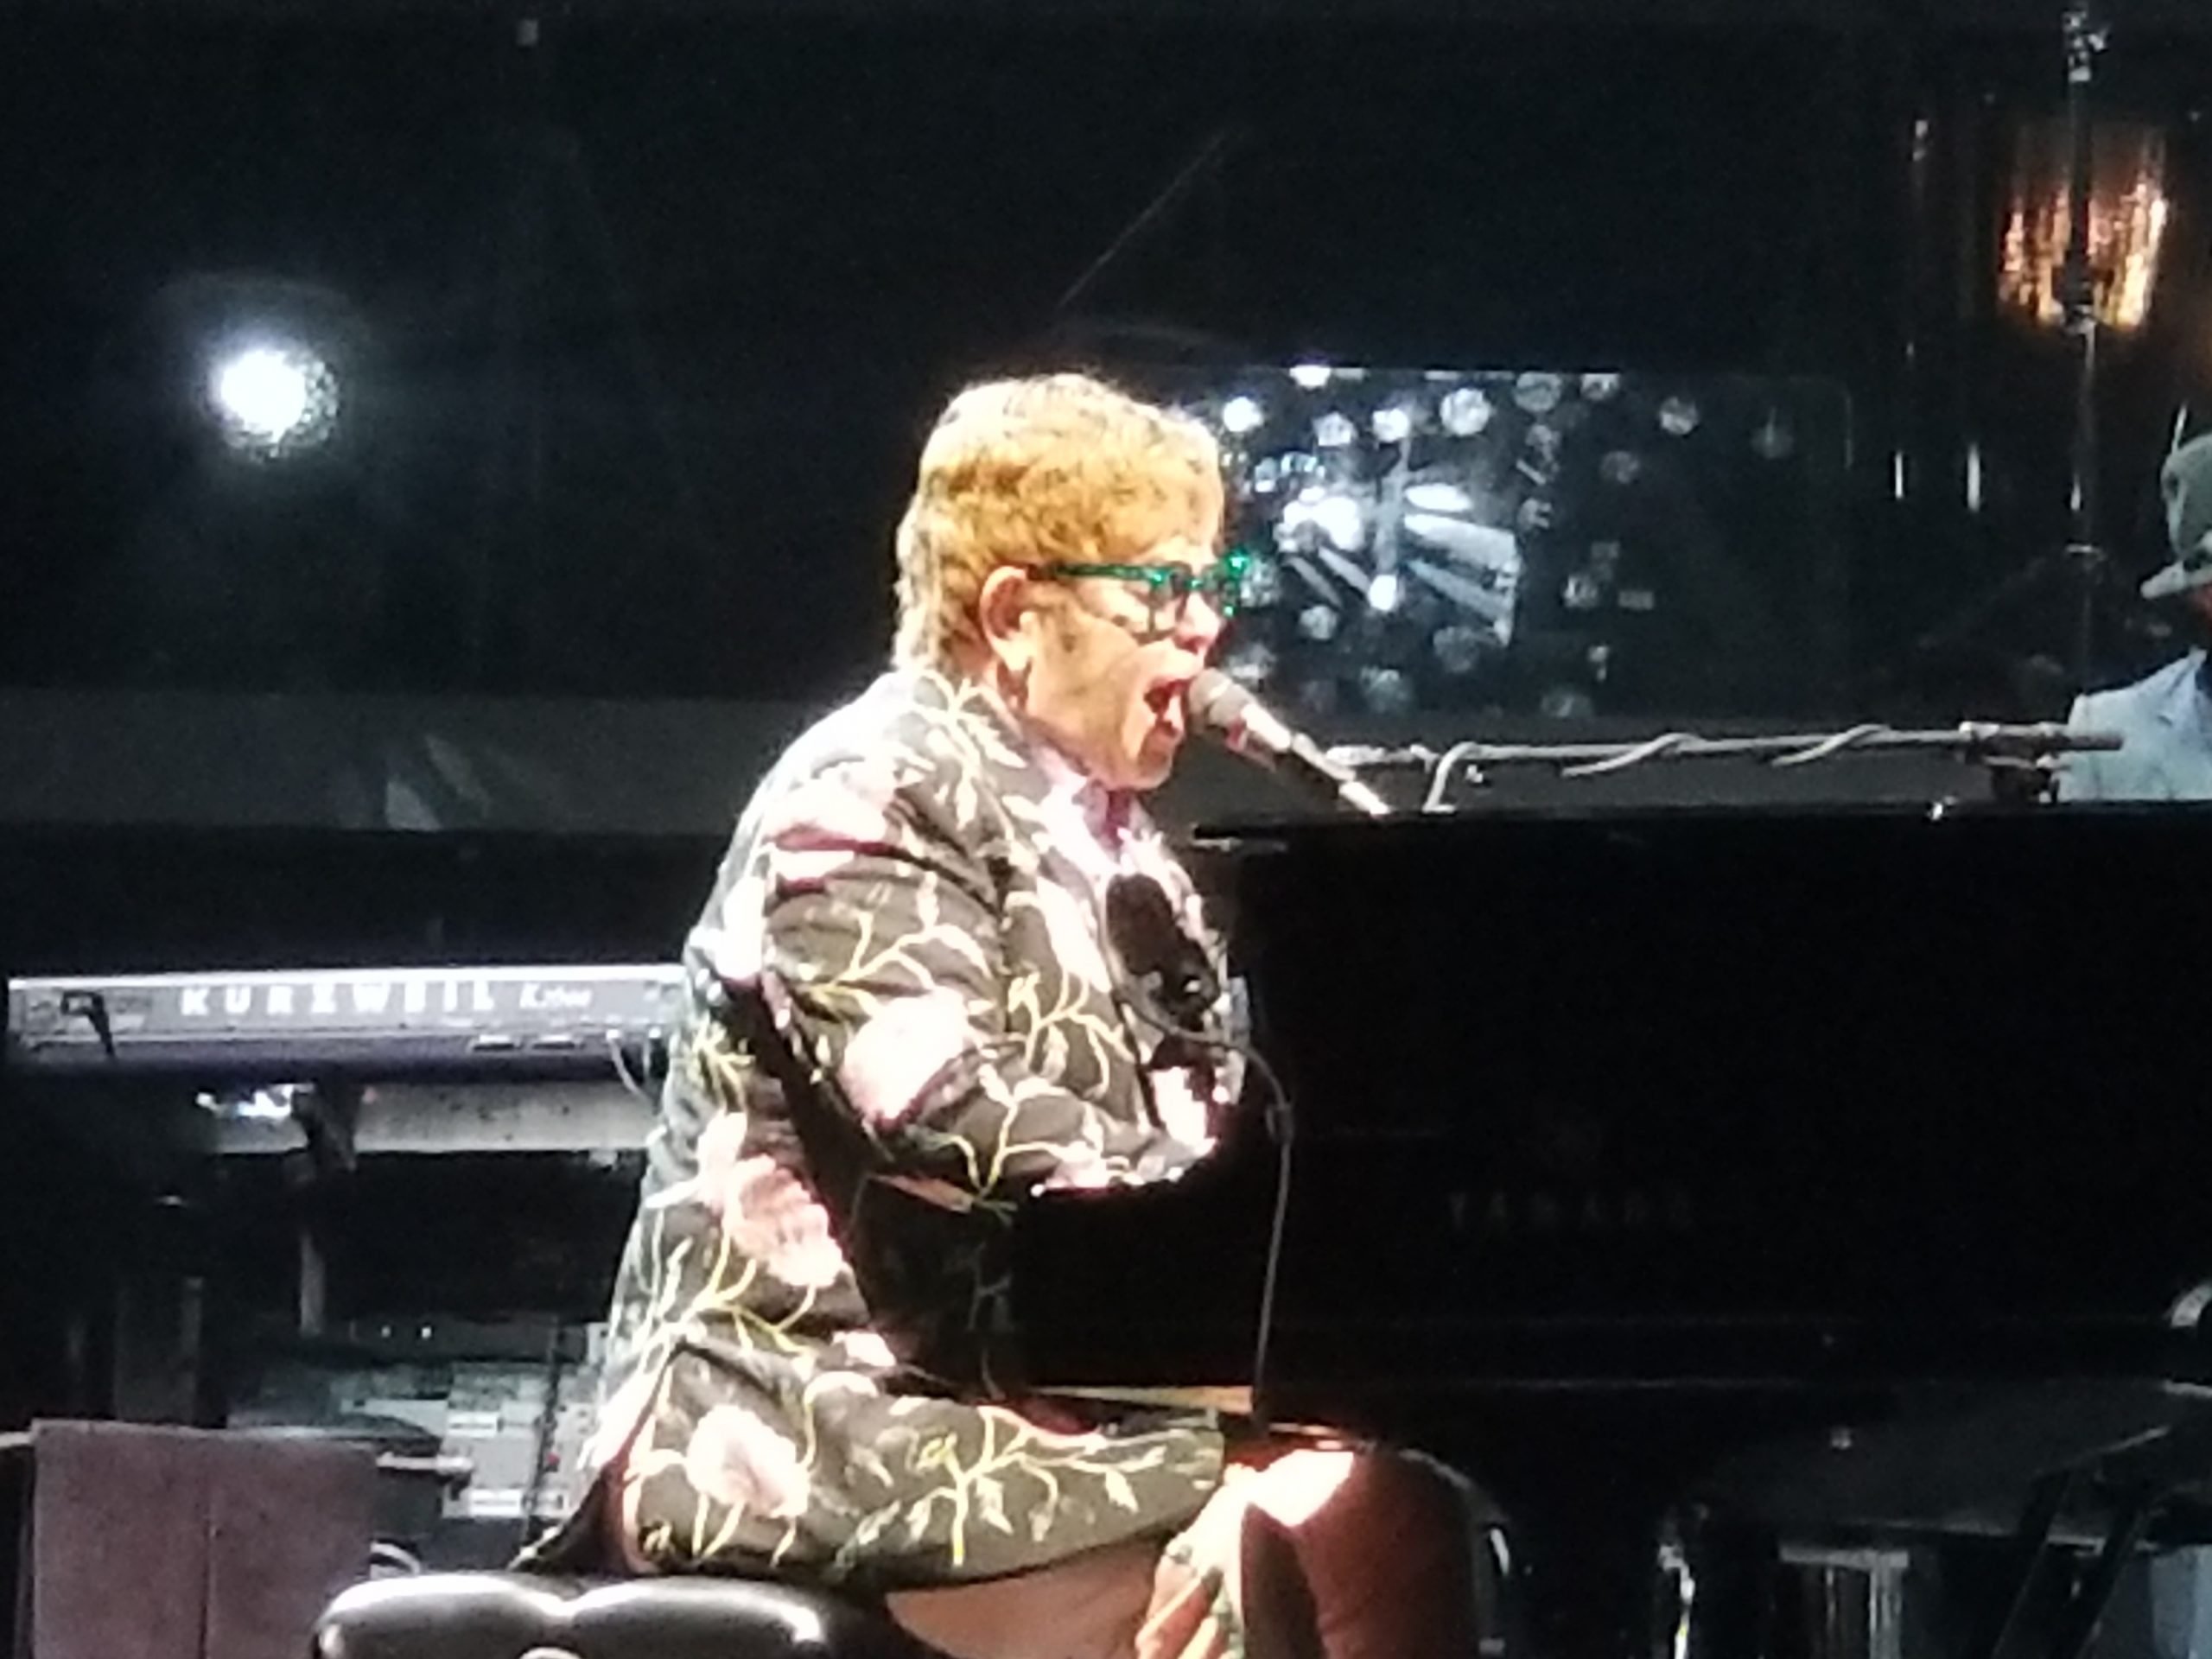 To Sir, With Love: Elton John Rocks the Smoothie King Center